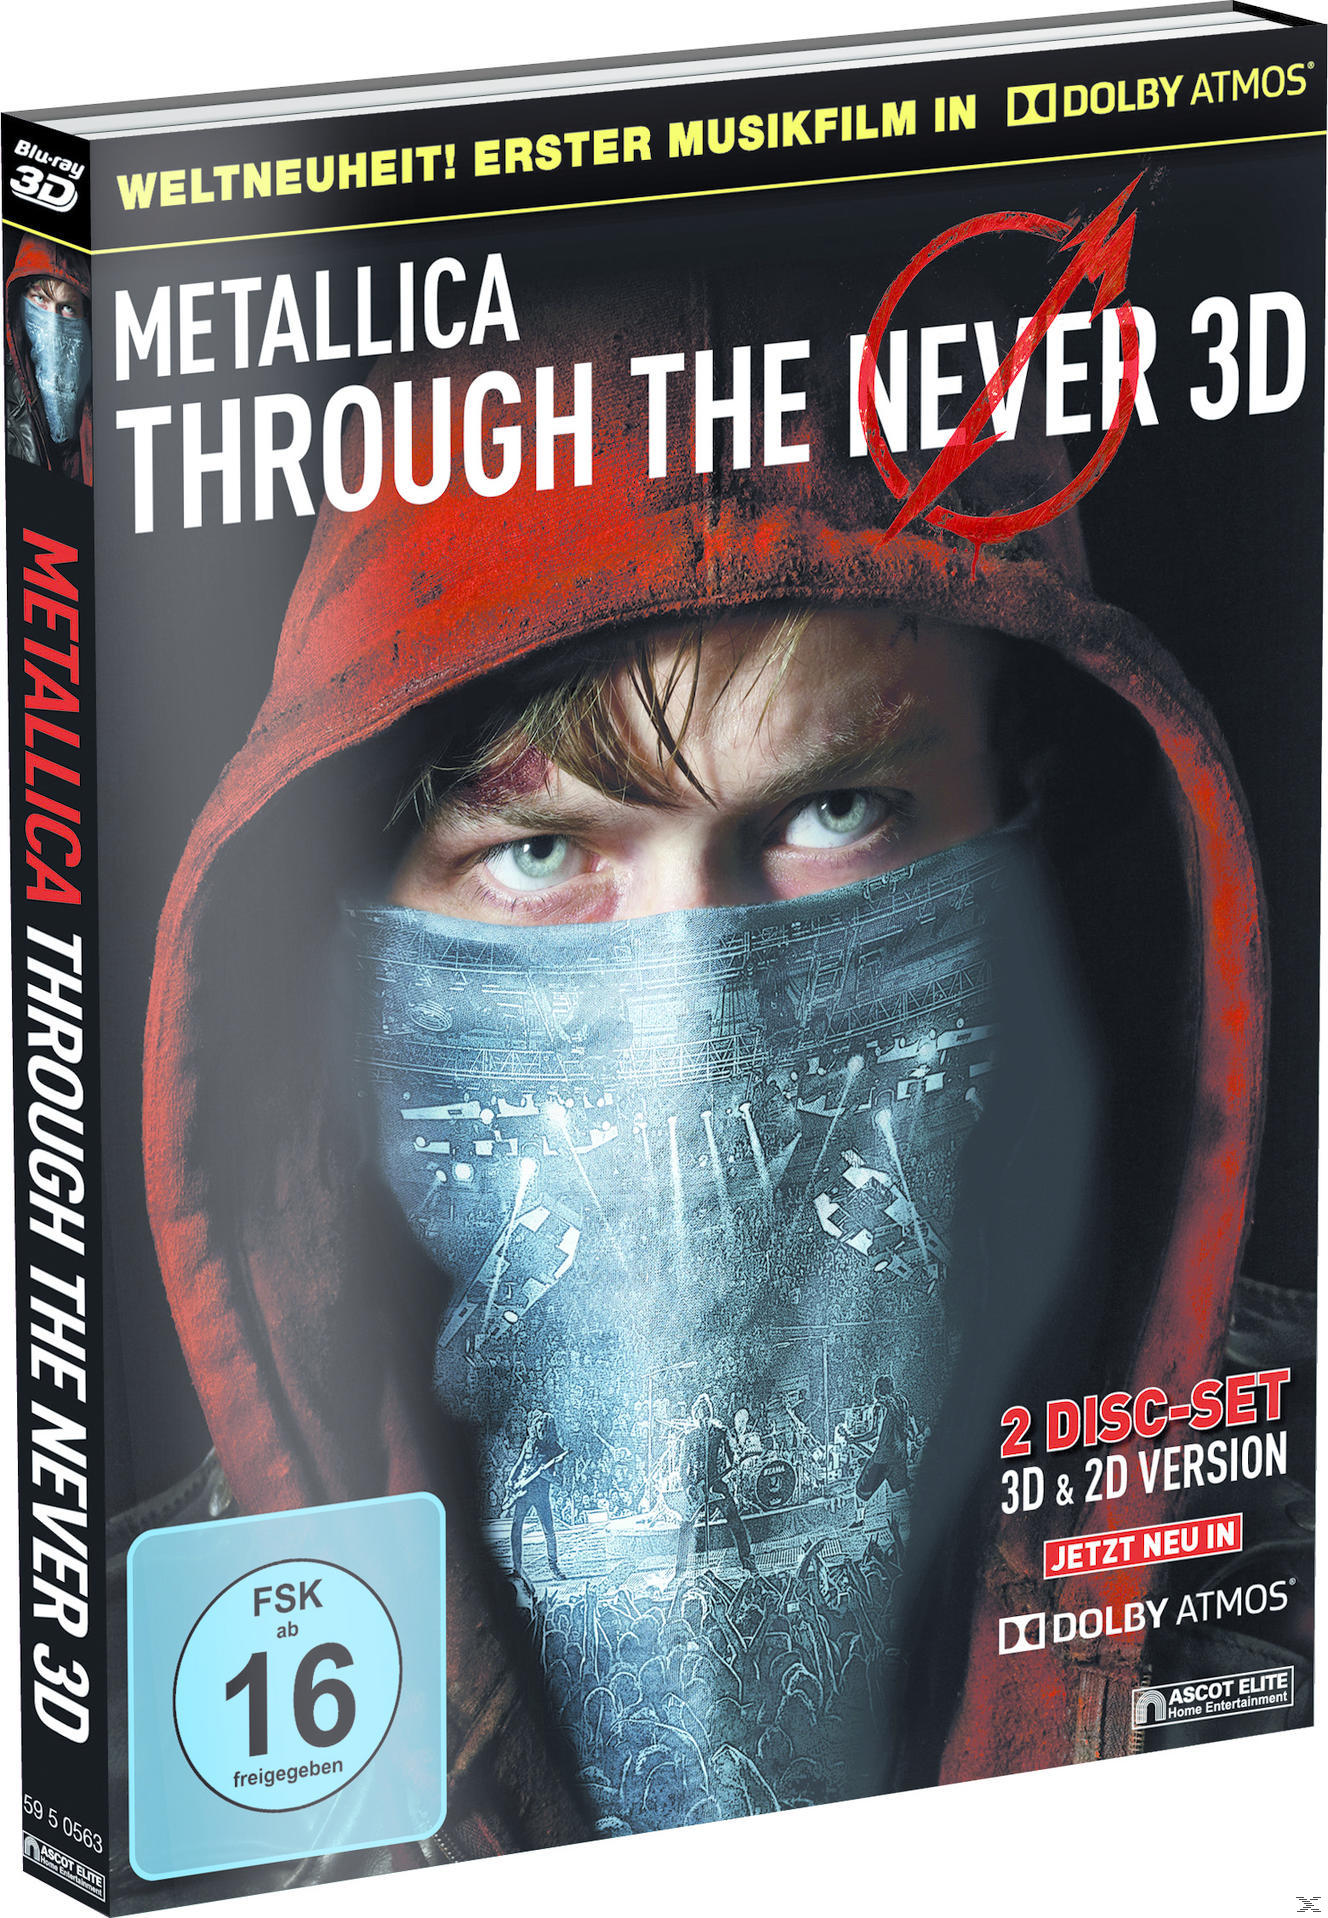 Never Blu-ray Through - - Atmos) (Dolby (3D (+2D)) the Metallica